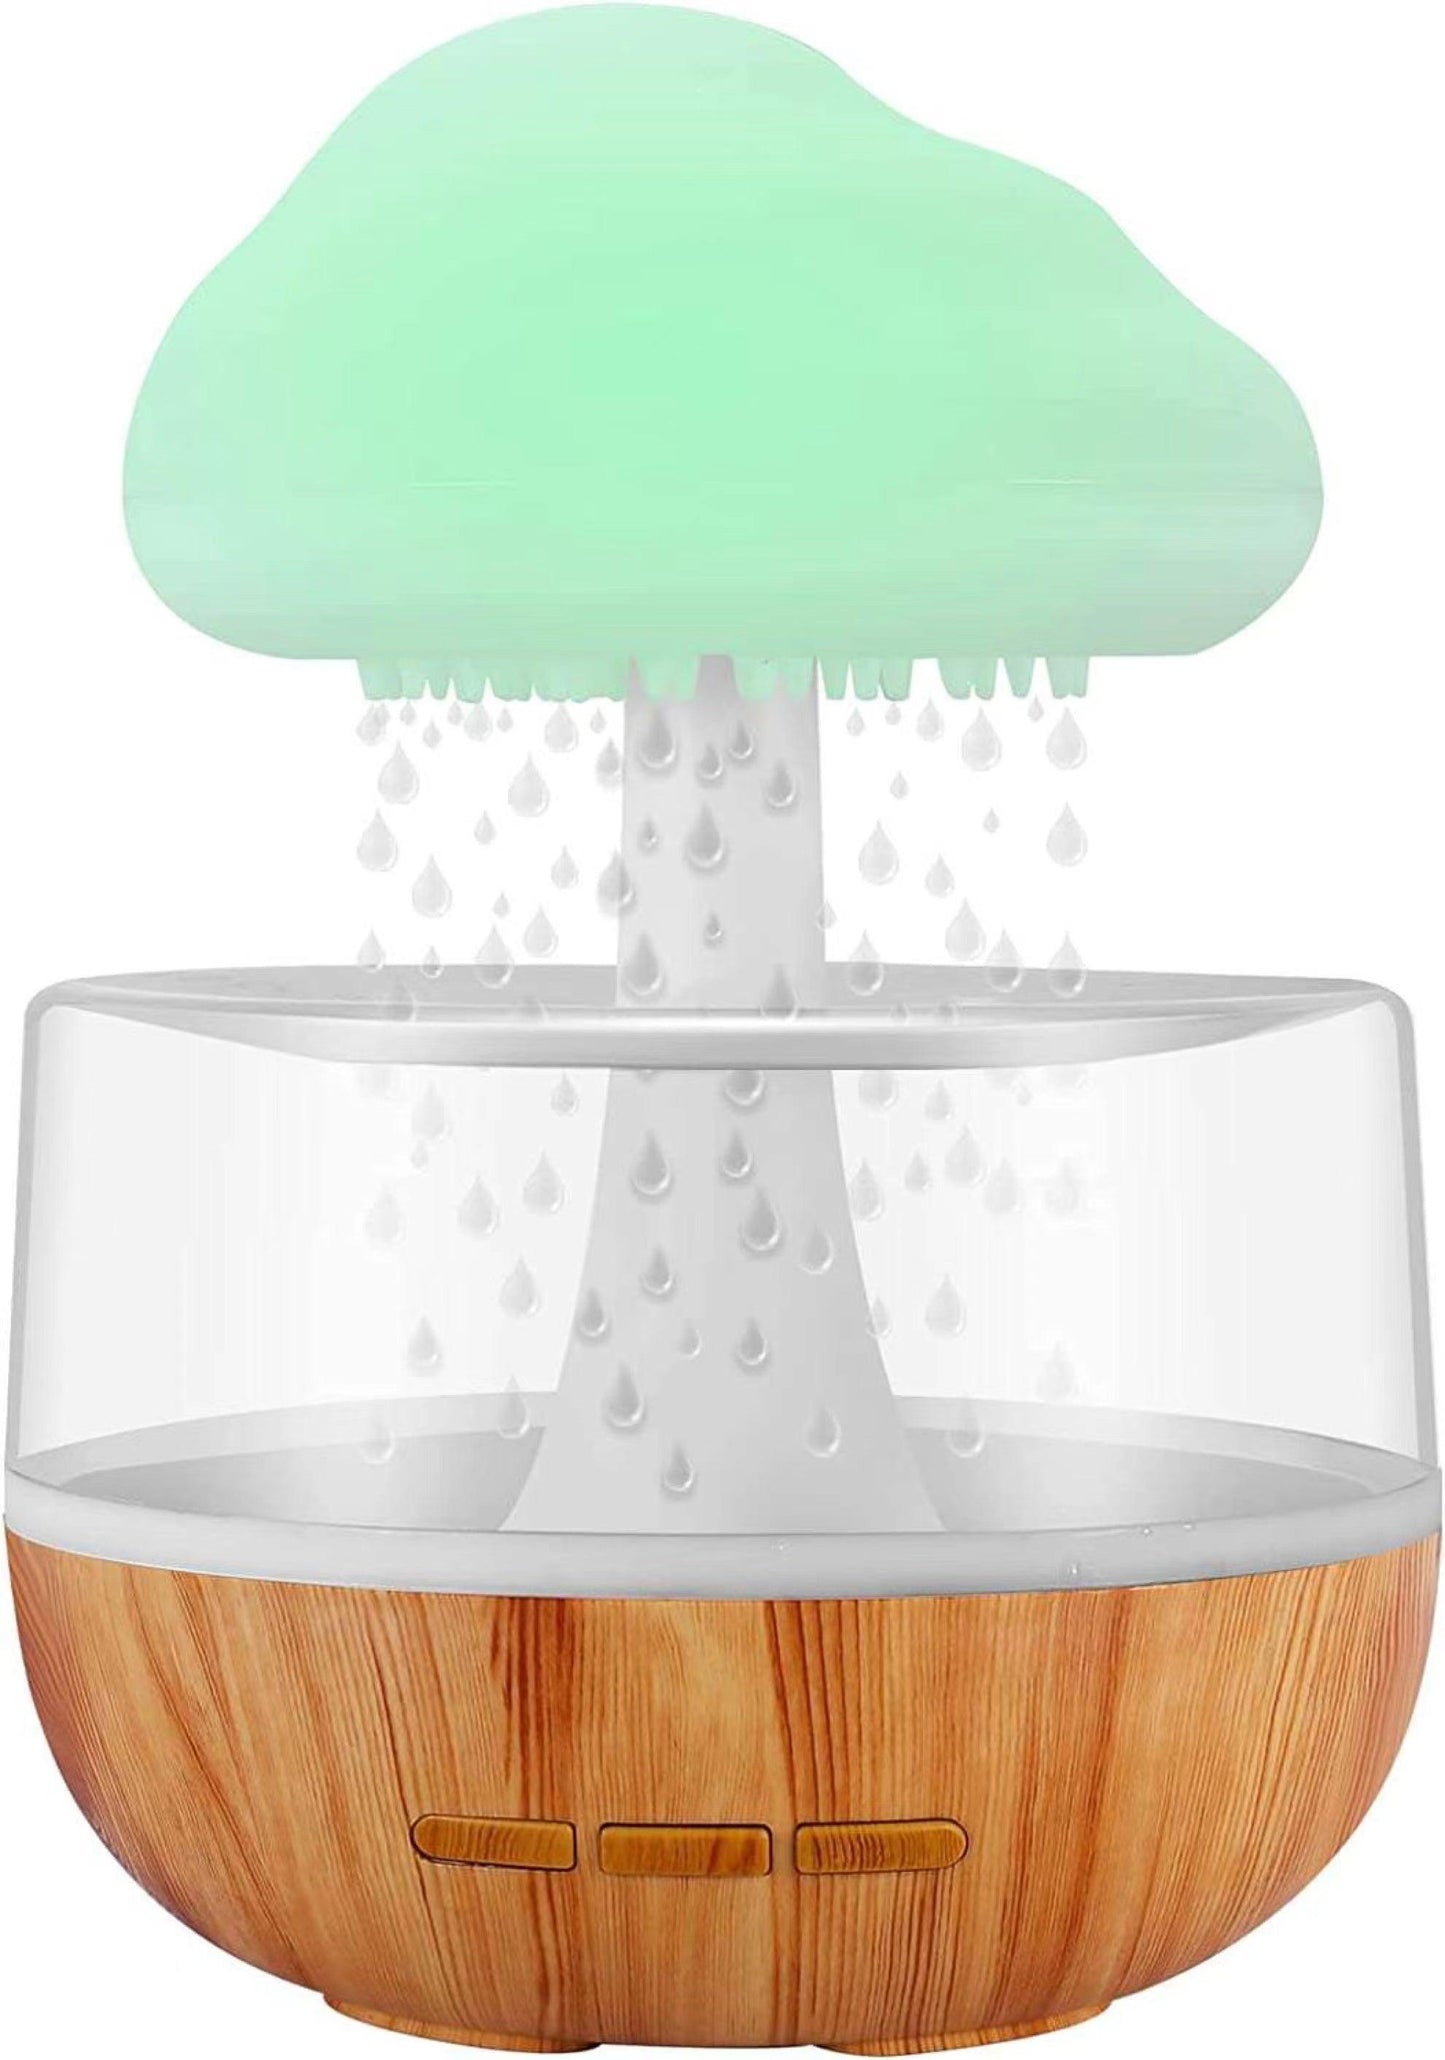 Rain Cloud Aroma Humidifier Home product